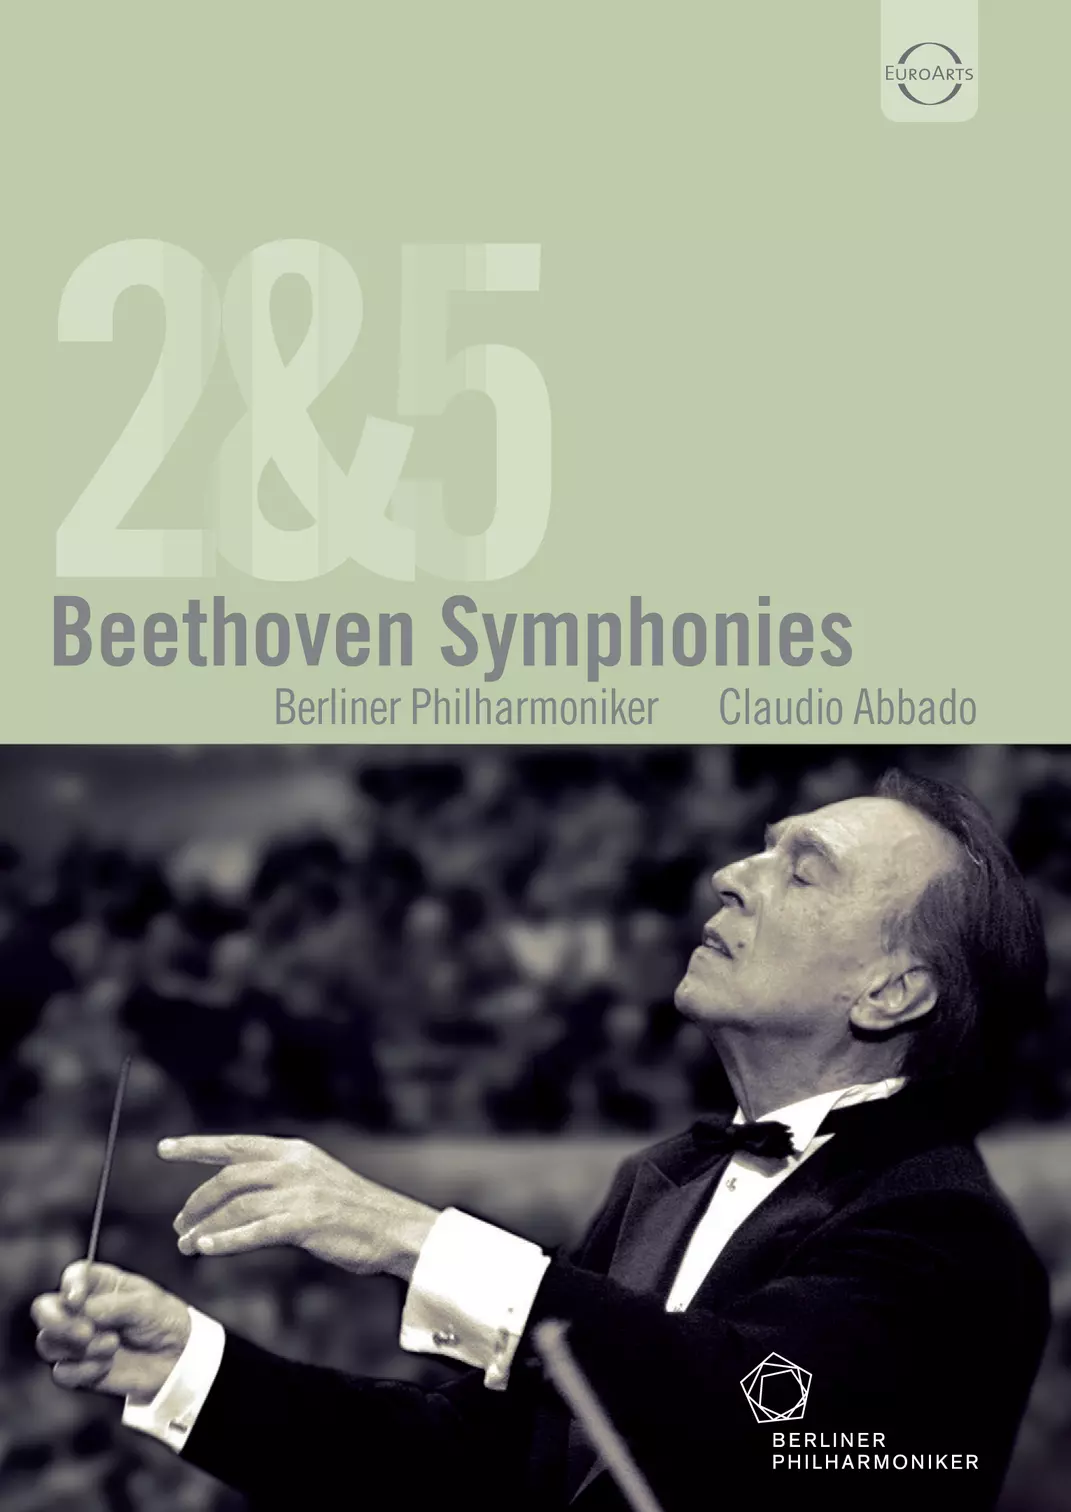 Berliner Philharmoniker - Beethoven: Symphonies Nos. 2 & 5